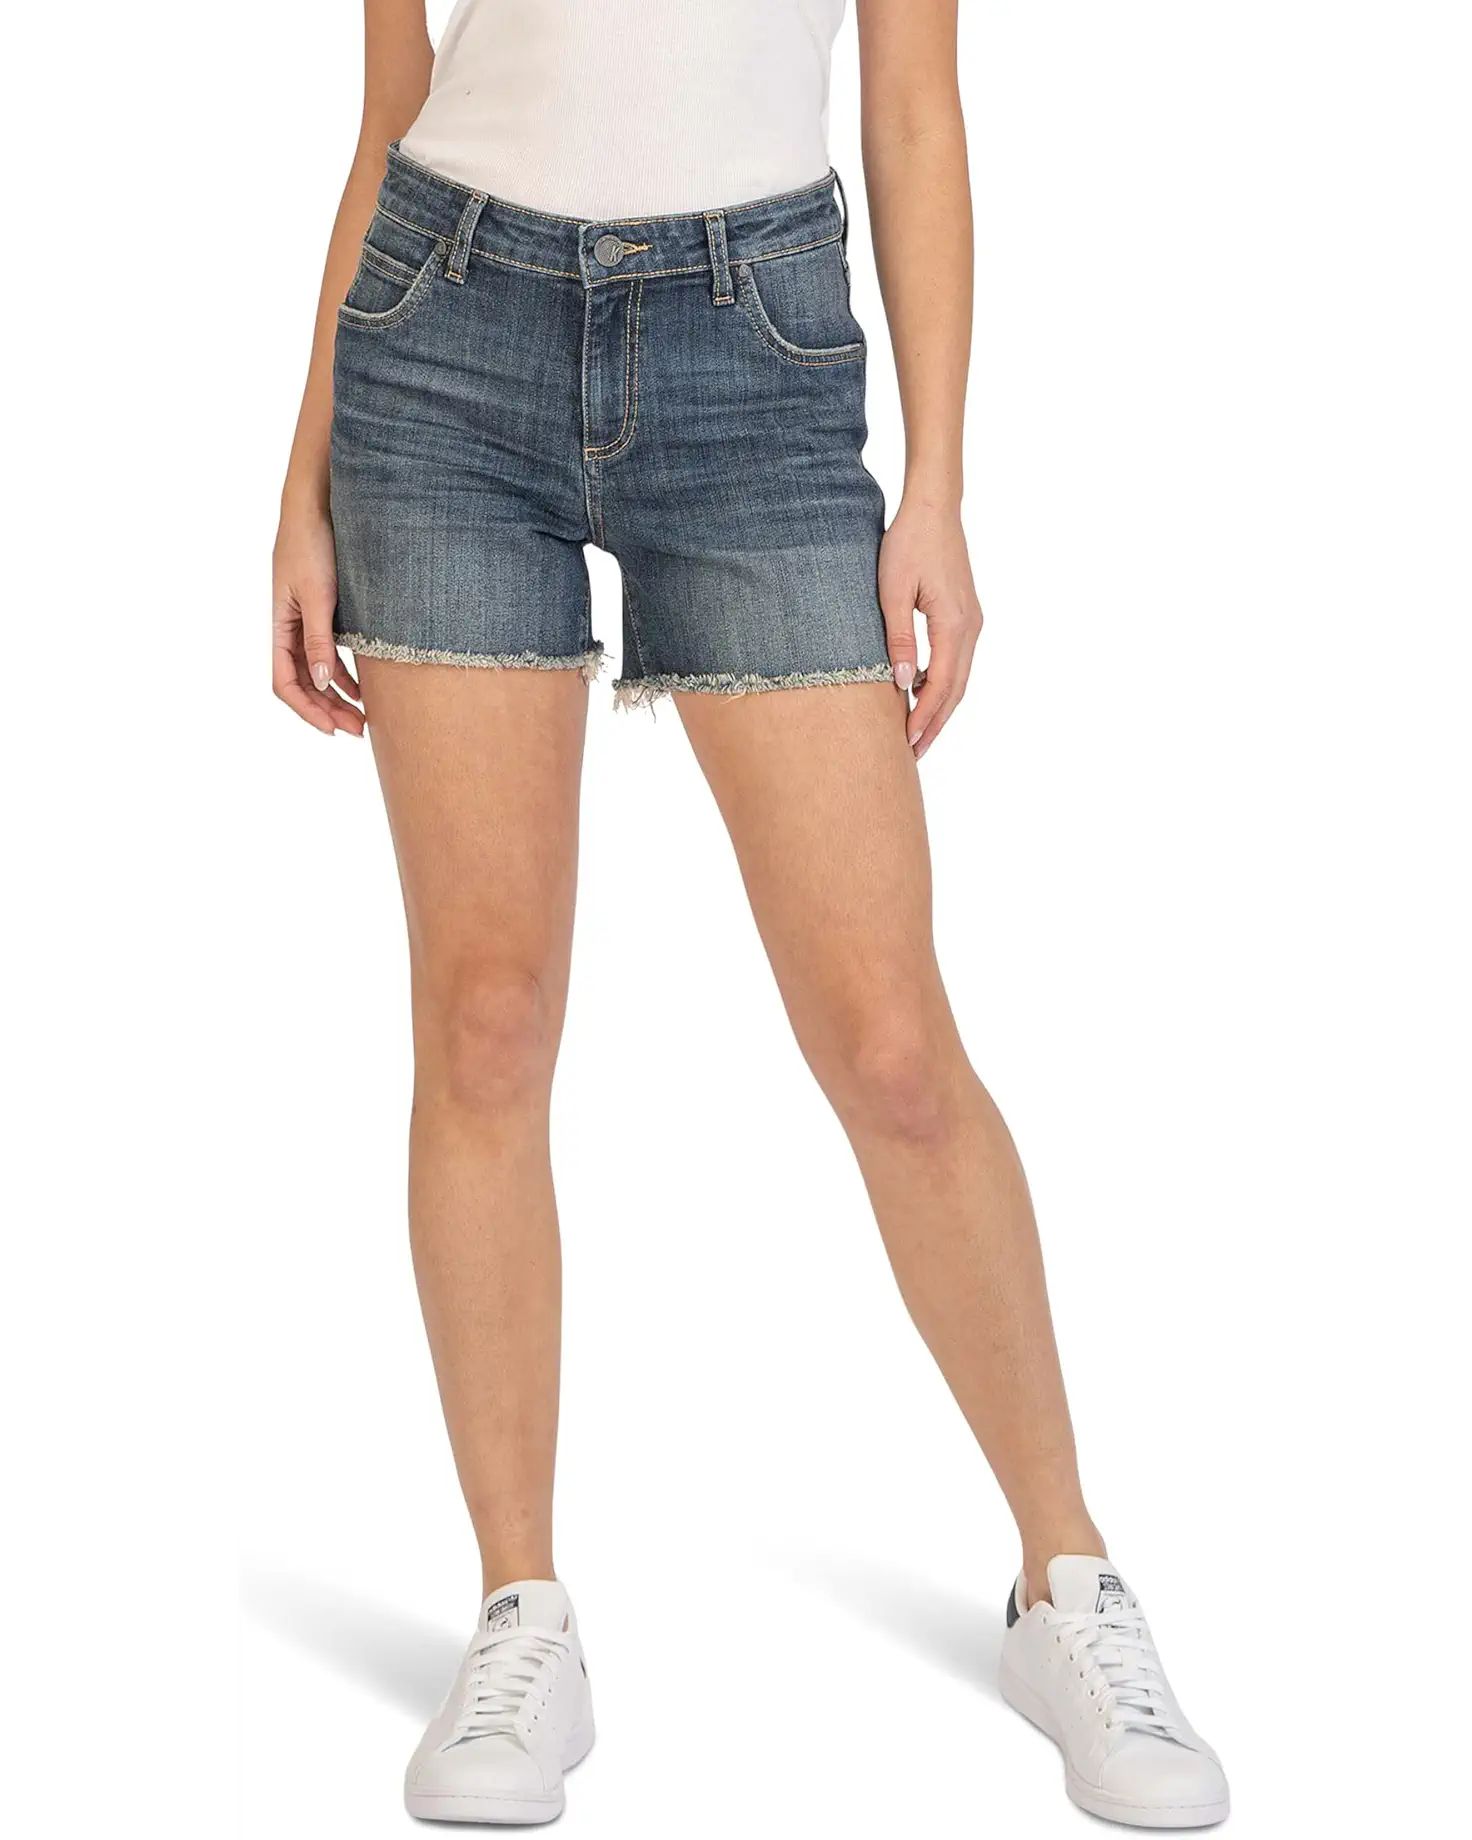 Gidget High-Rise Shorts in Stimulatting | Zappos